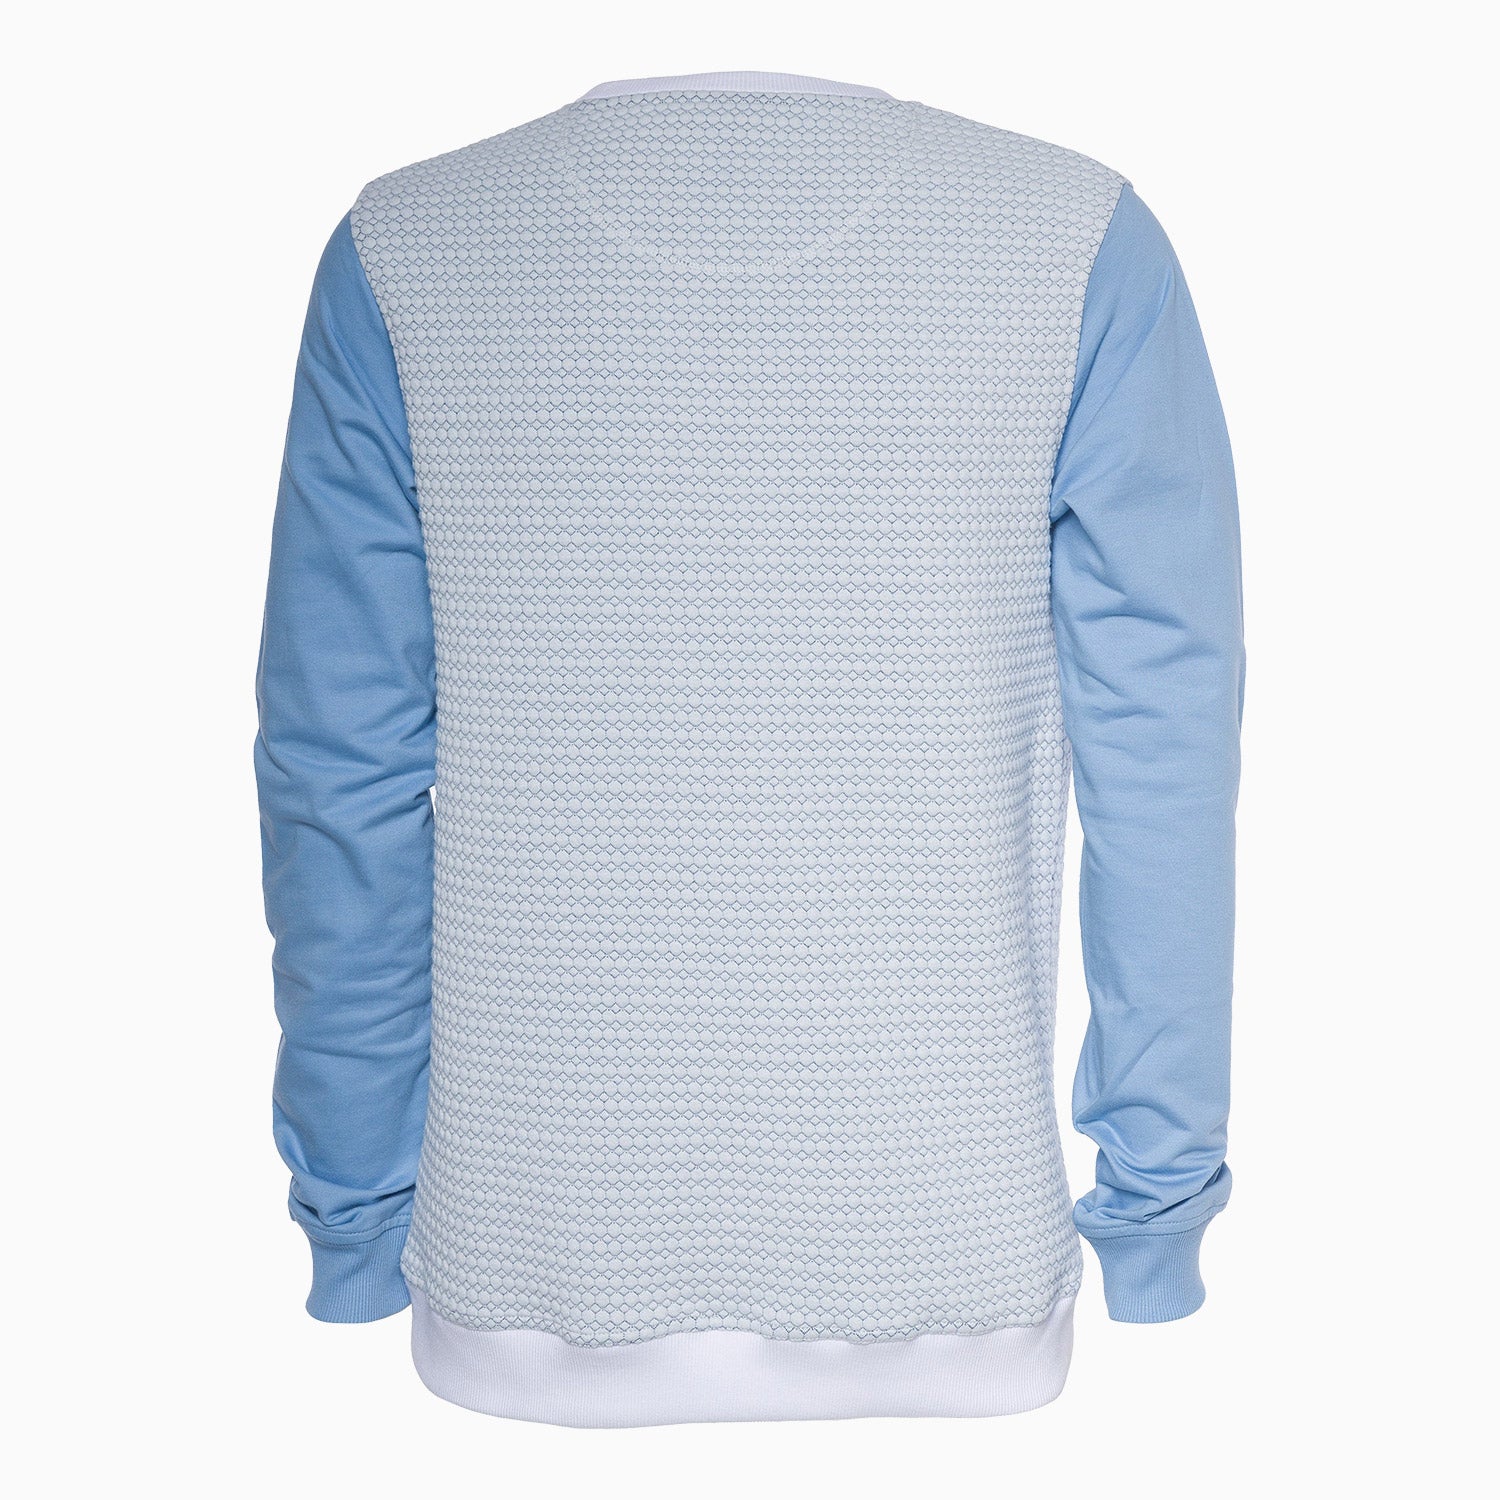 a-tiziano-mens-kalel-jacquard-knit-sweatshirt-41atm4005-wht